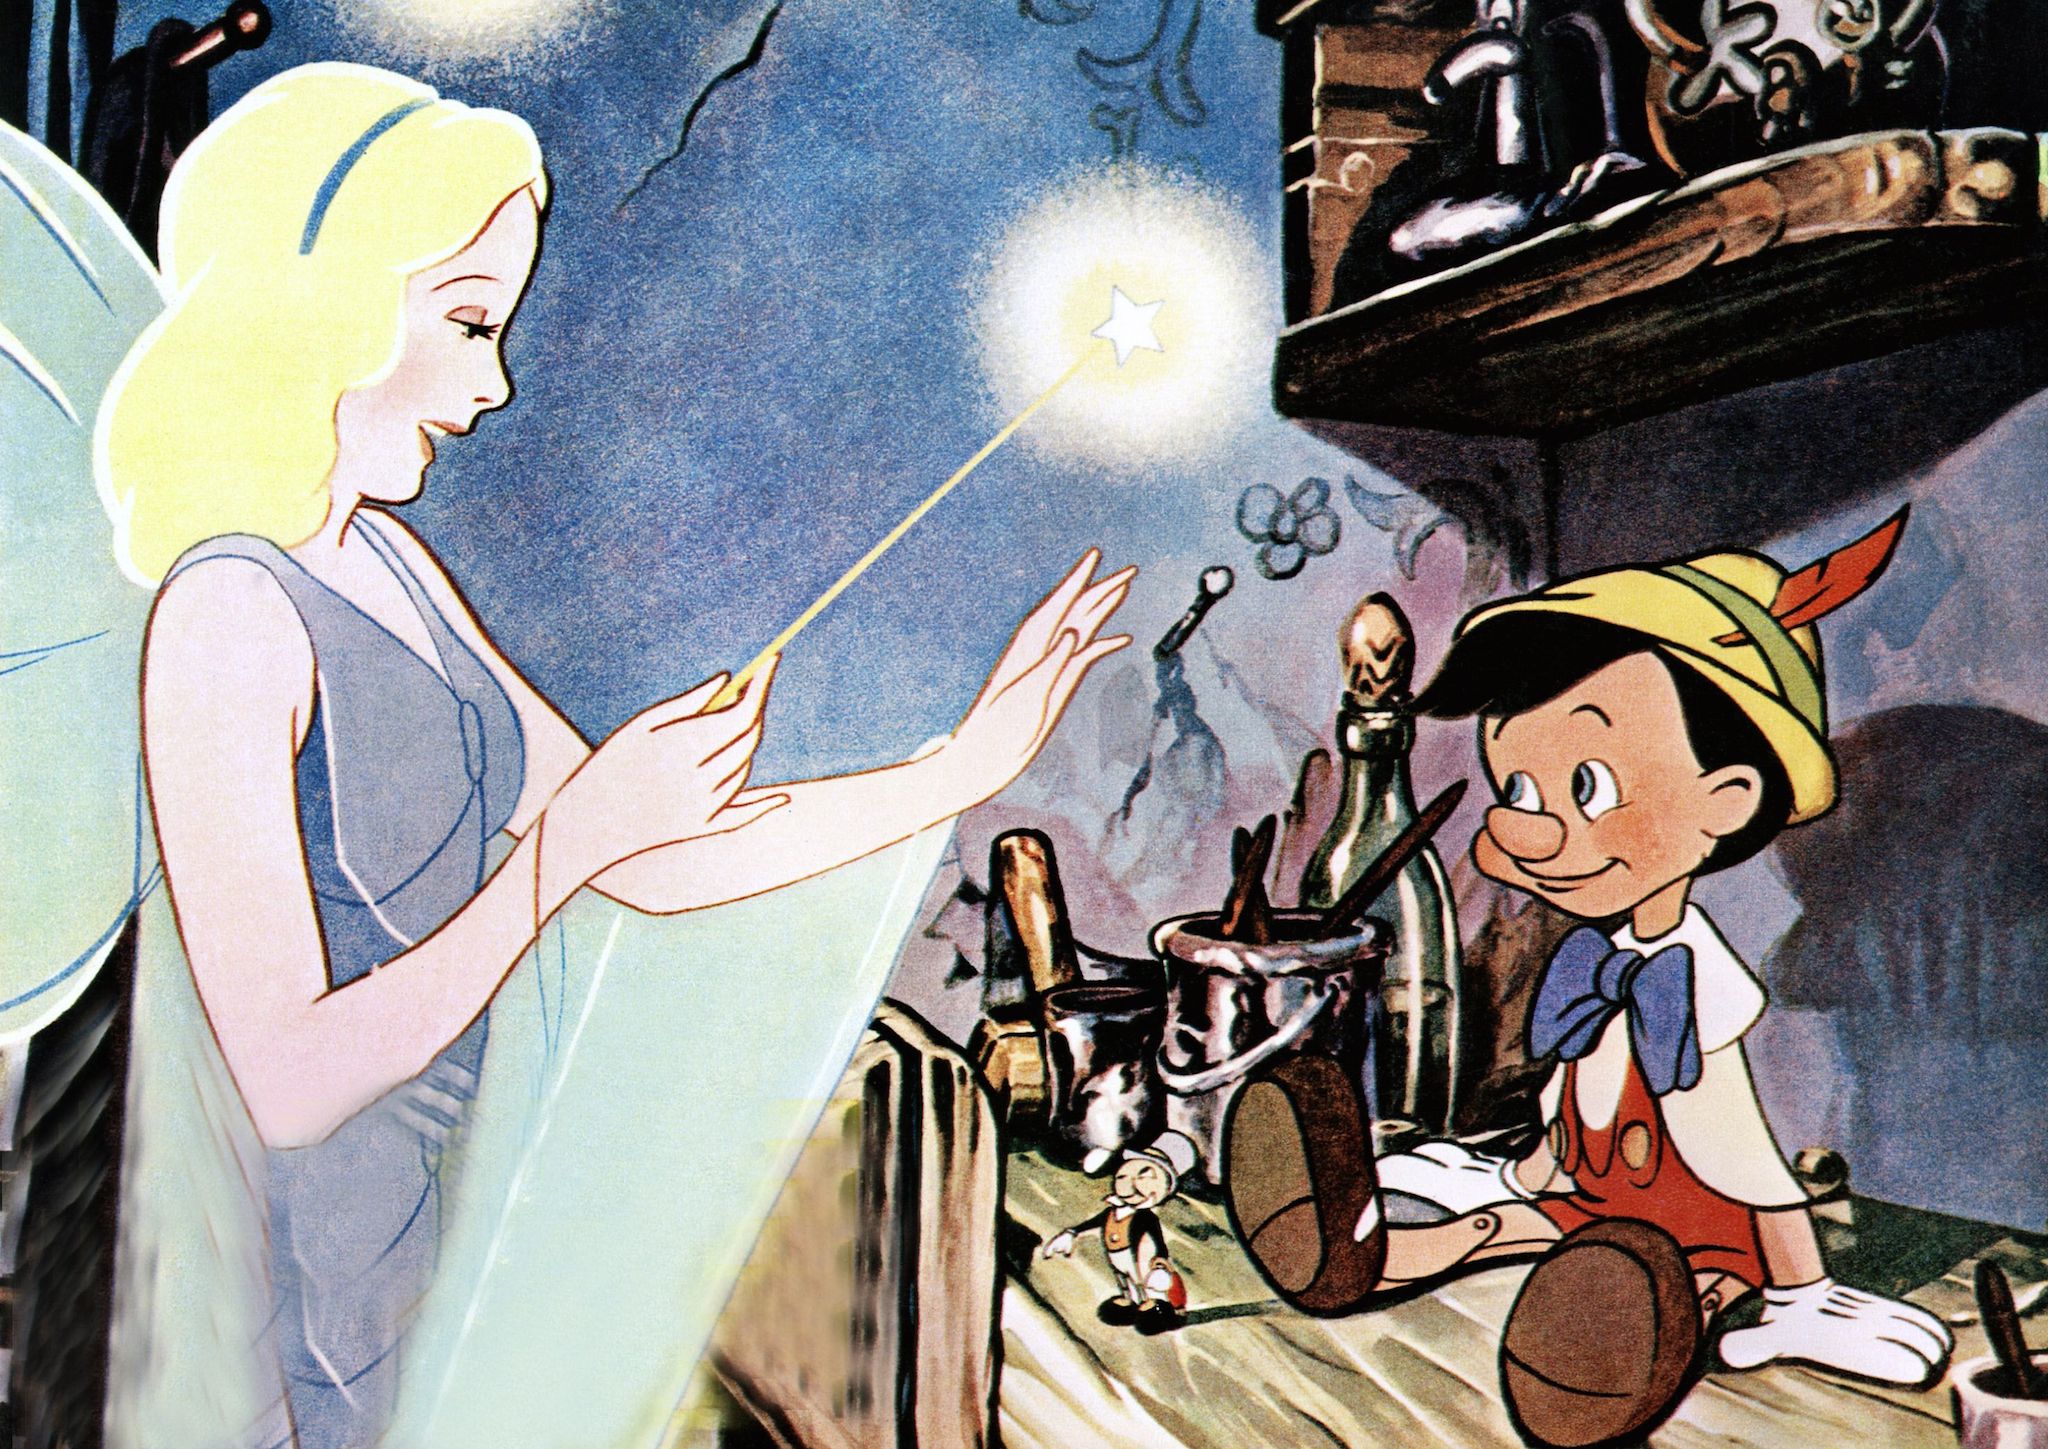 The Blue Fairy and Pinocchio in Disney's original 1940 animated film